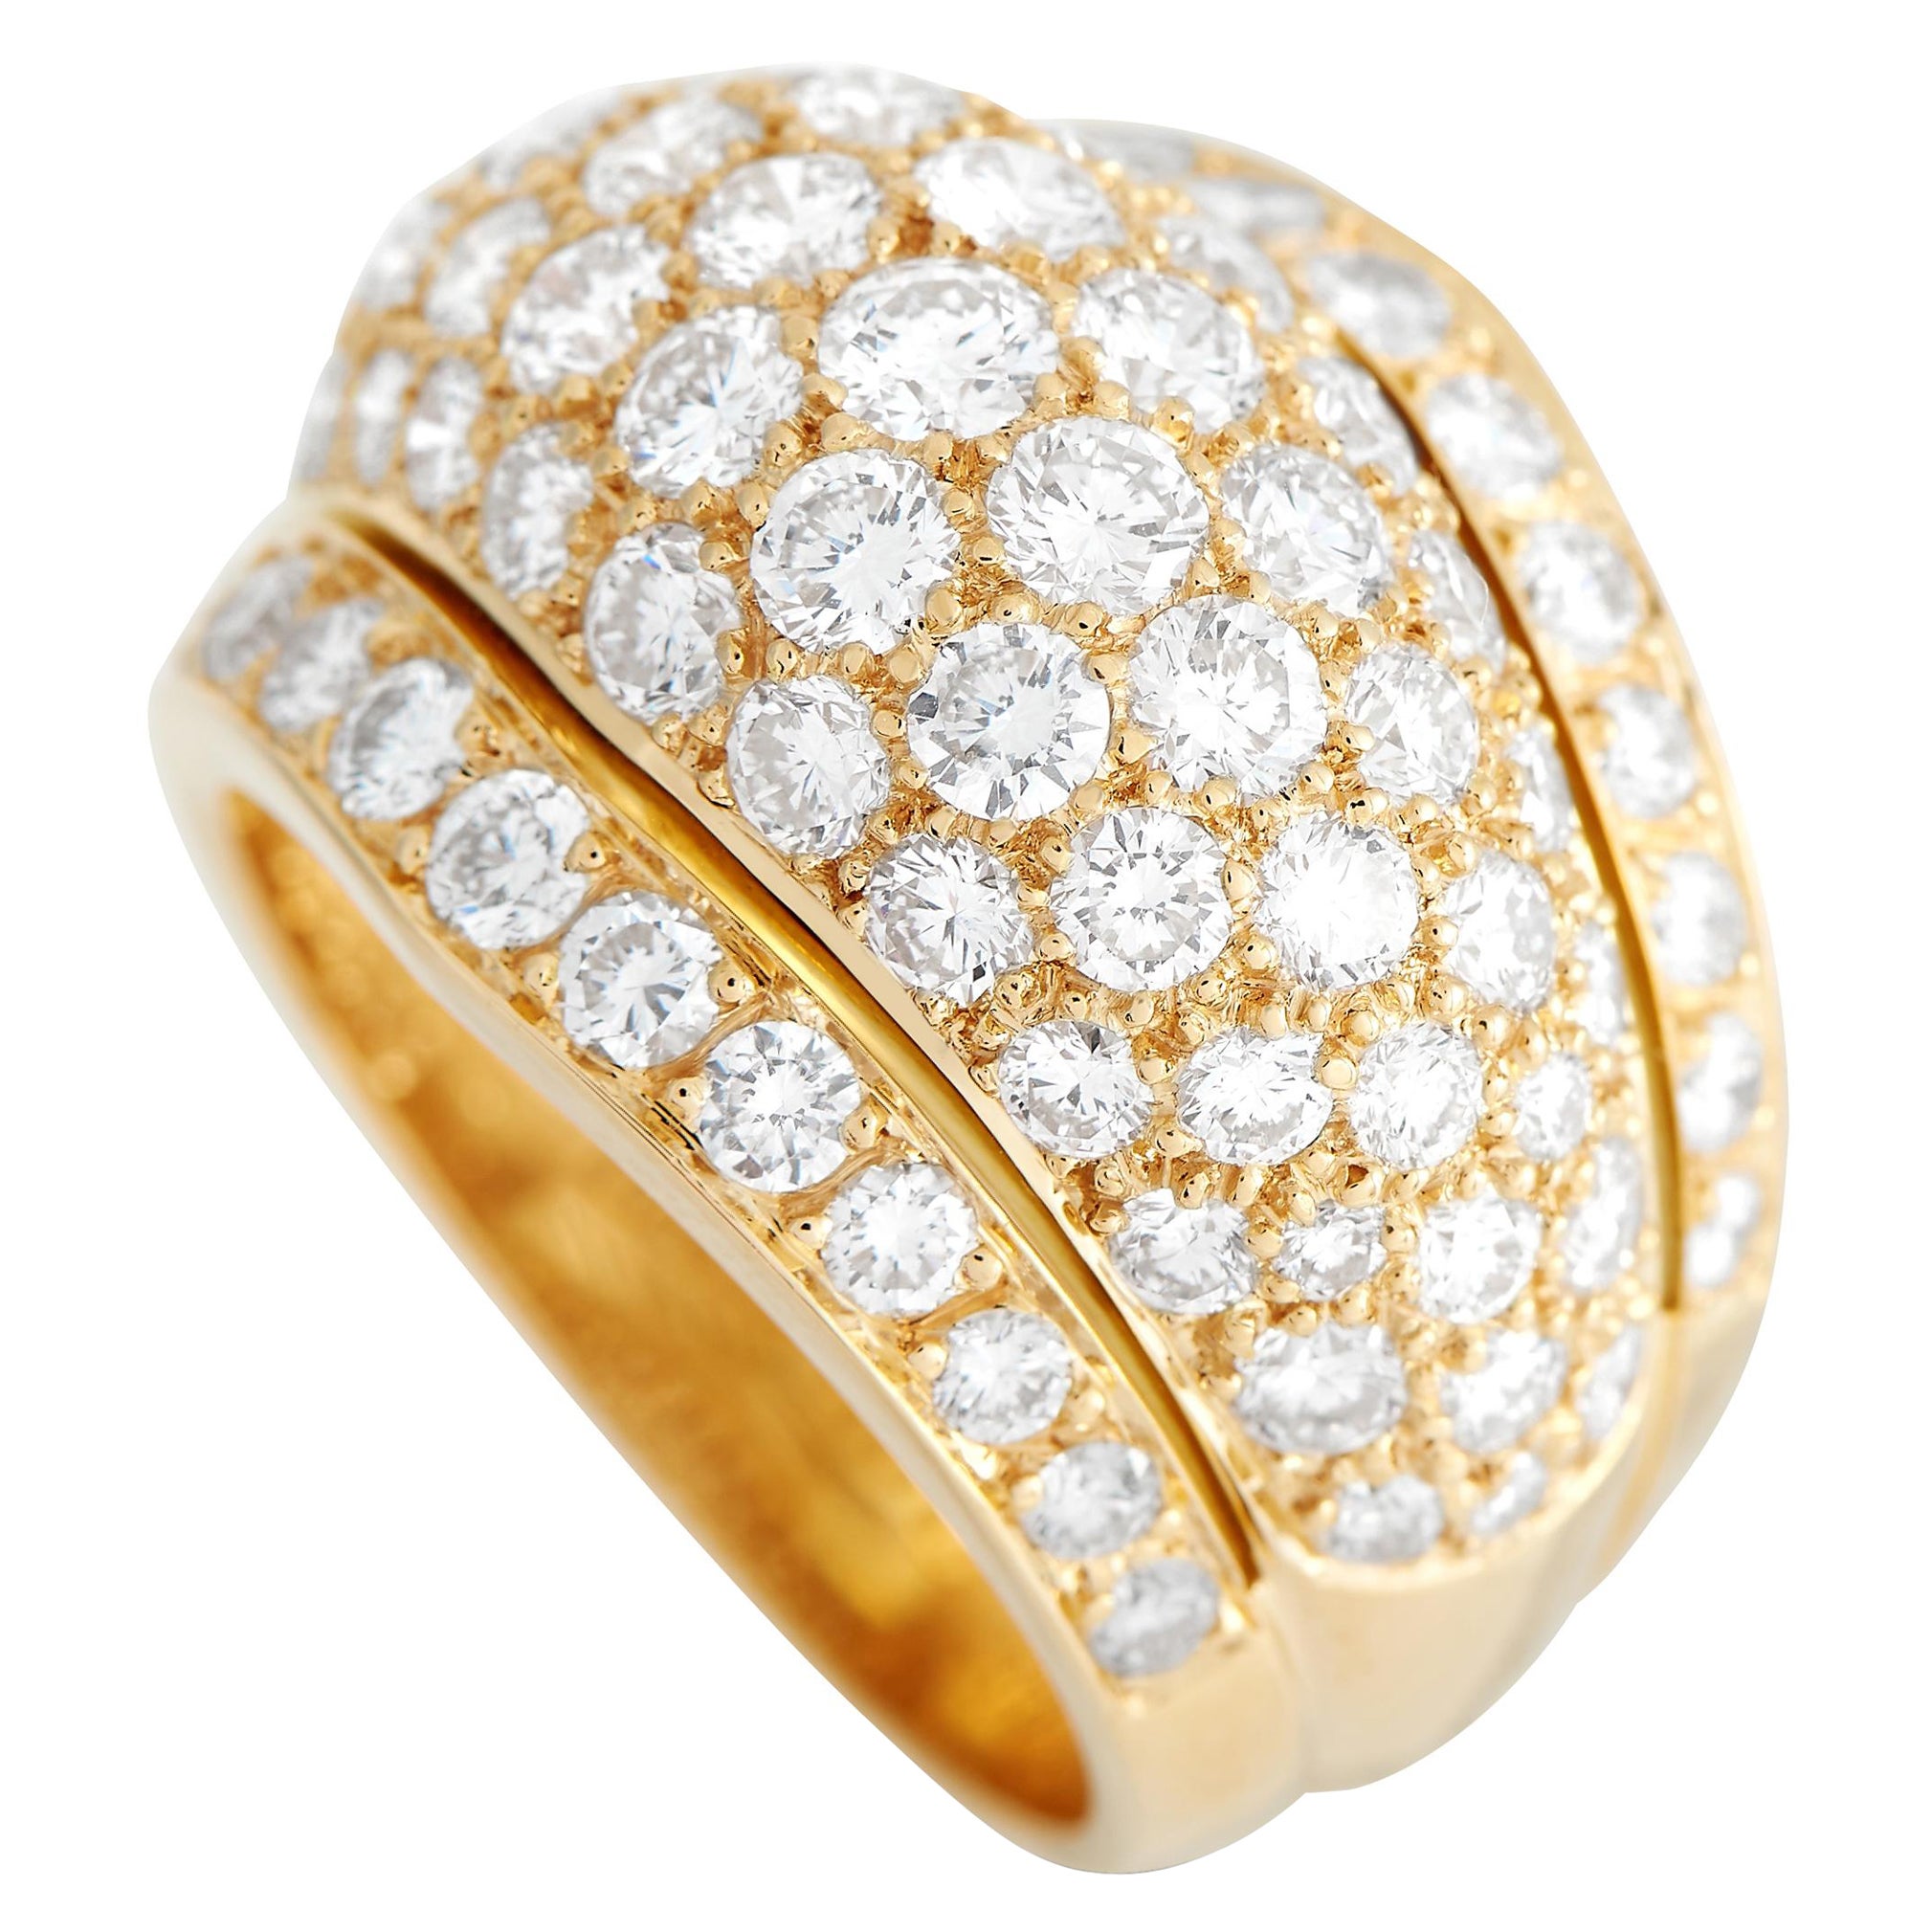 Cartier Nigeria 18k Yellow Gold 5.0ct Diamond Bombé Ring